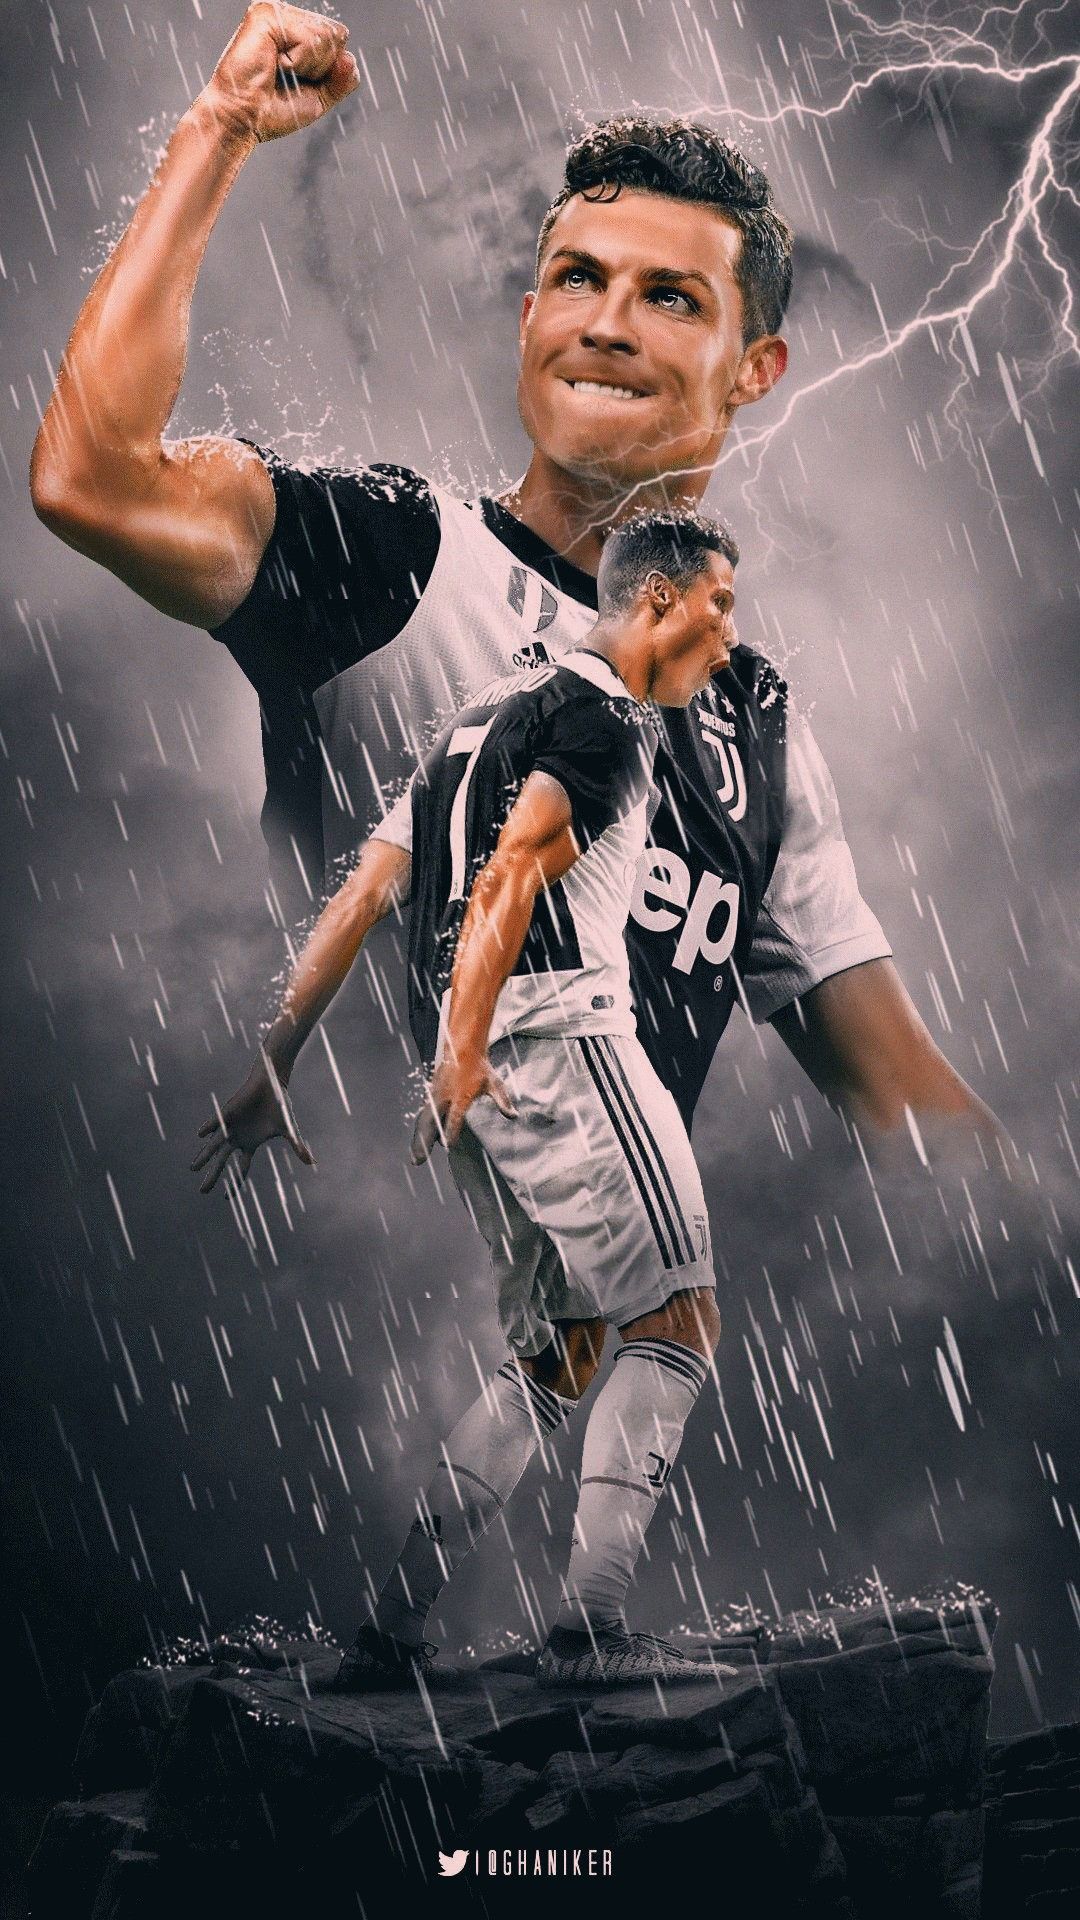 Cristiano Ronaldo Wallpaper Goat : T'Foot's tweet - "Cristiano Ronaldo